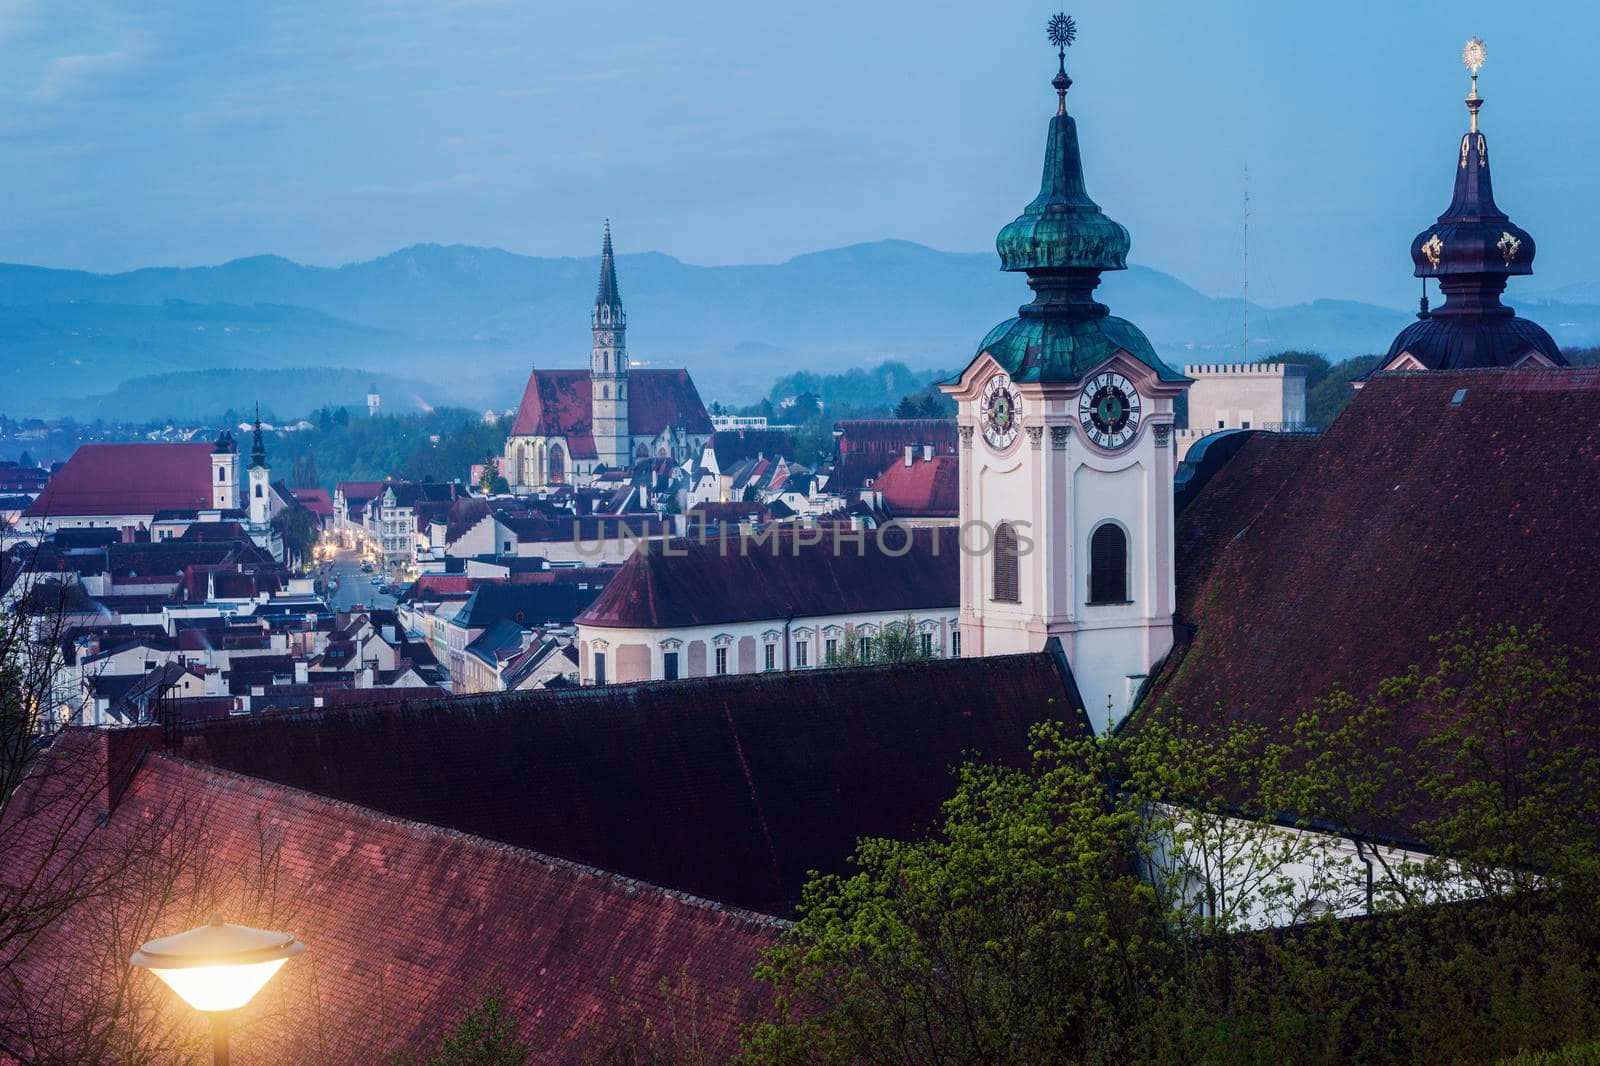 Steyr panorama with St. Michael's Church. Steyr, Upper Austria, Austria..